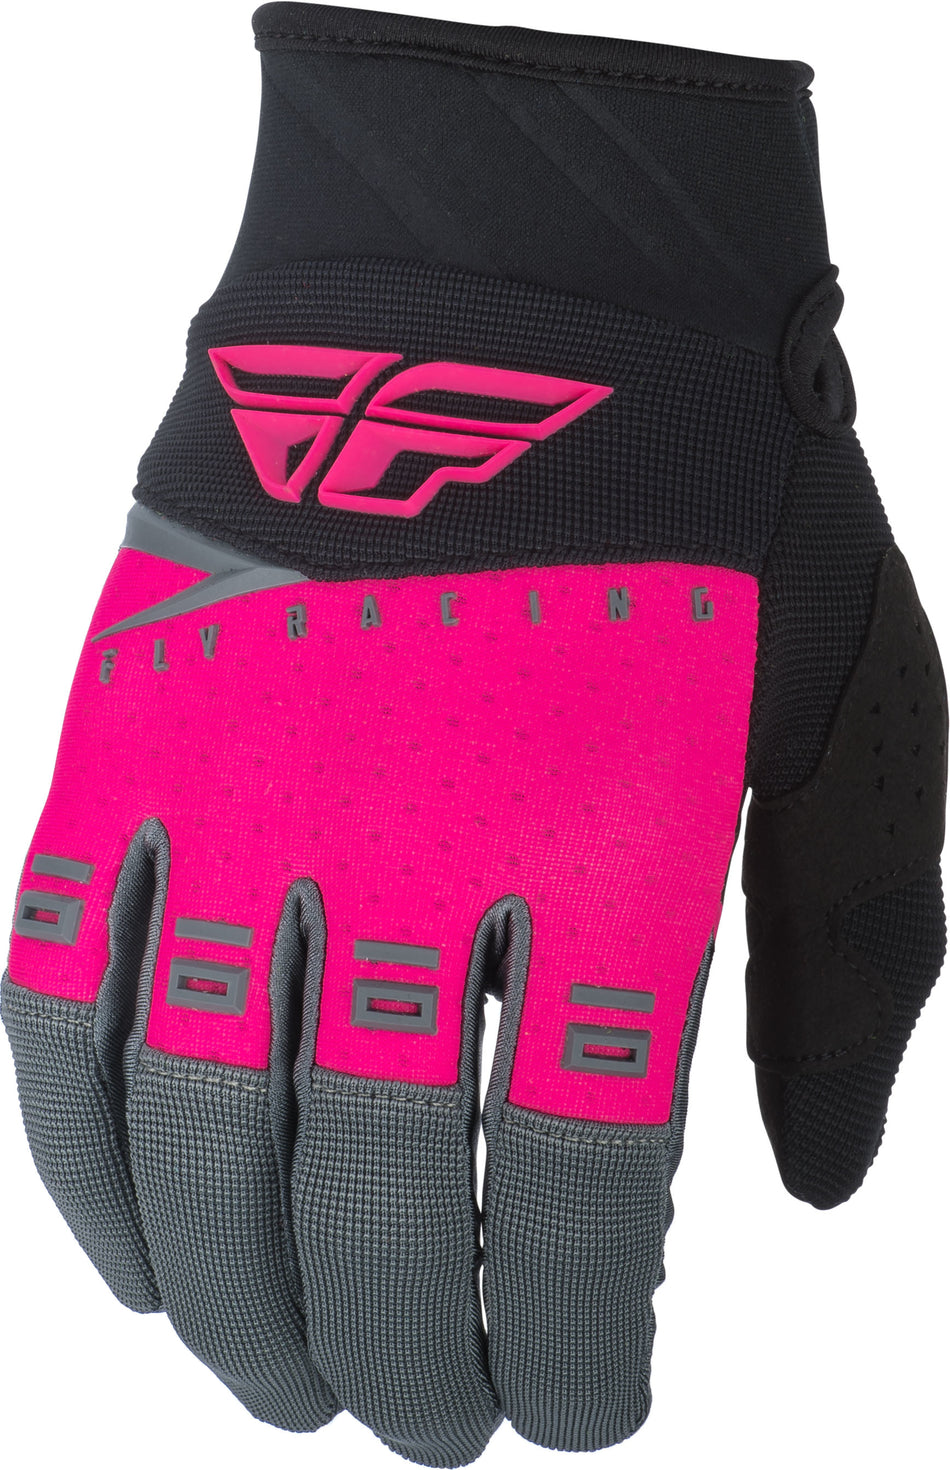 FLY RACING F-16 Gloves Neon Pink/Black/Grey Sz 11 372-91811